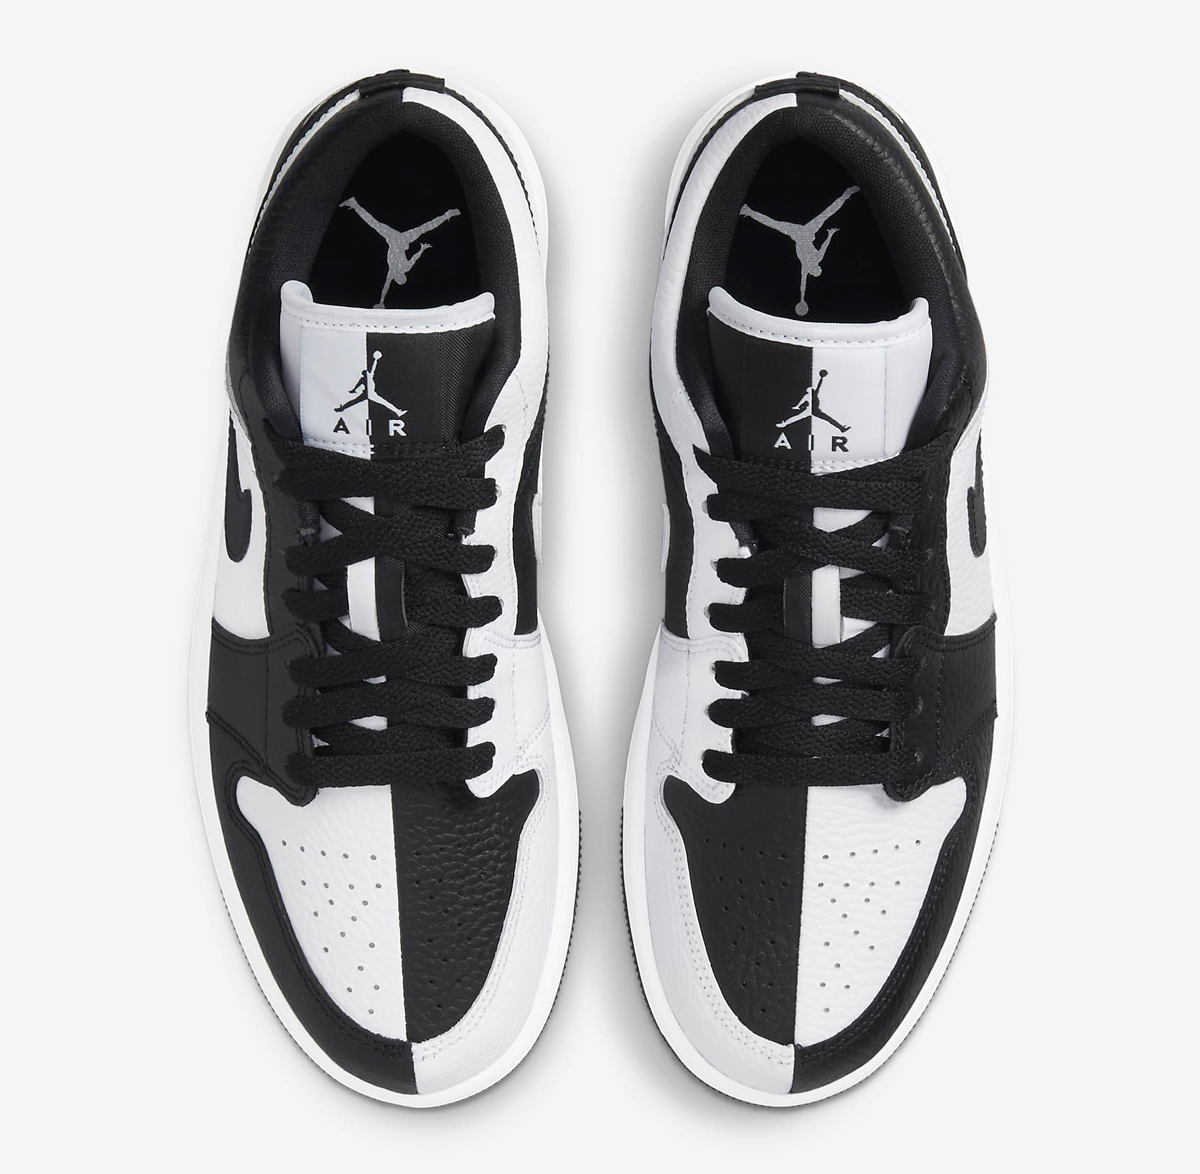 Air-Jordan-1-Low-Split-Black-White-Release-Date-4